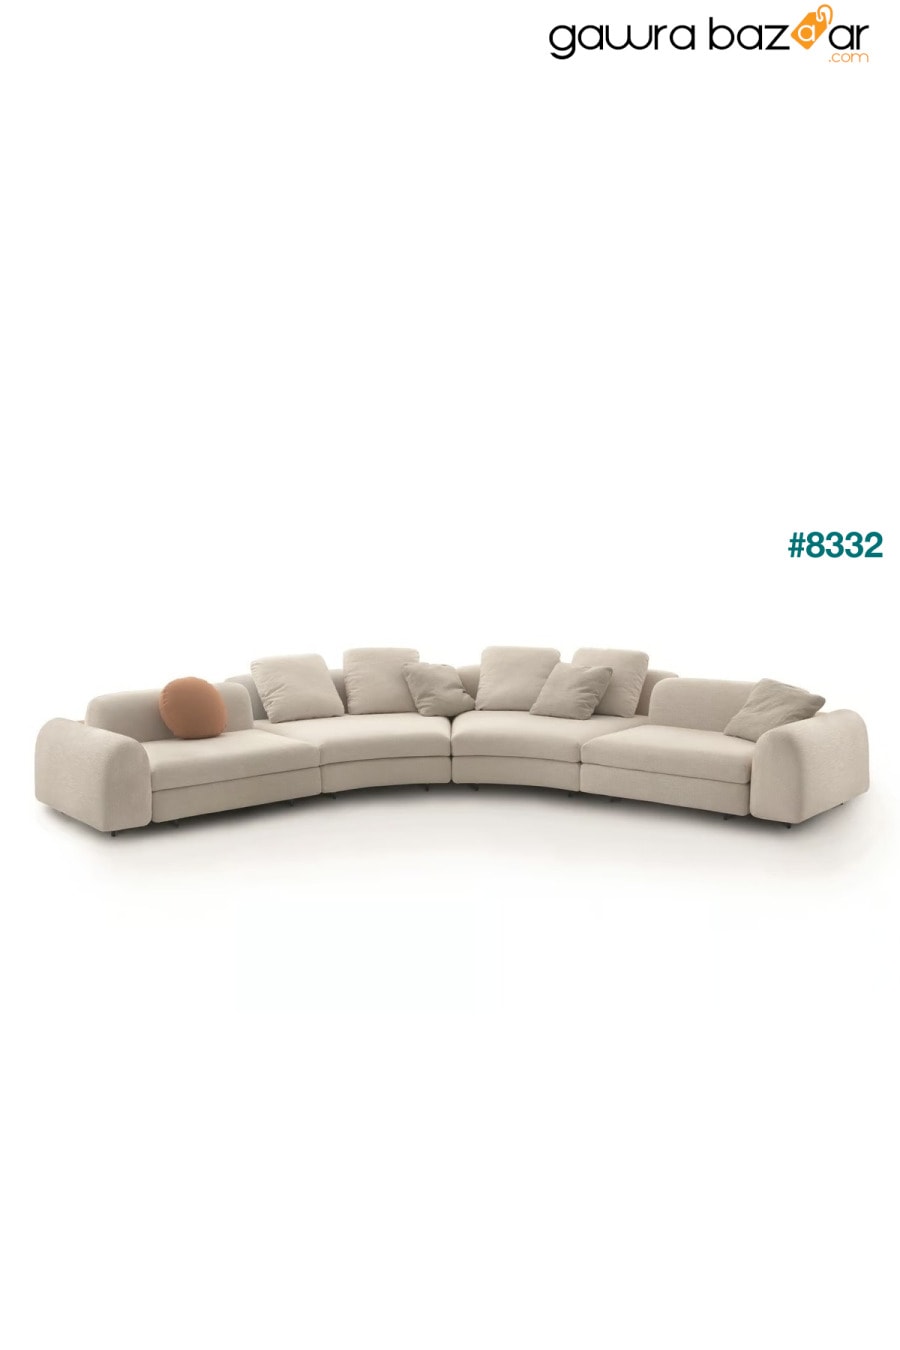 Parlex-A طقم أريكة تيدي بيضاوي الشكل مكون من 5 قطع من طاولة القهوة في غرفة المعيشة ومجموعة L في الزاوية الوظيفية Passion 3